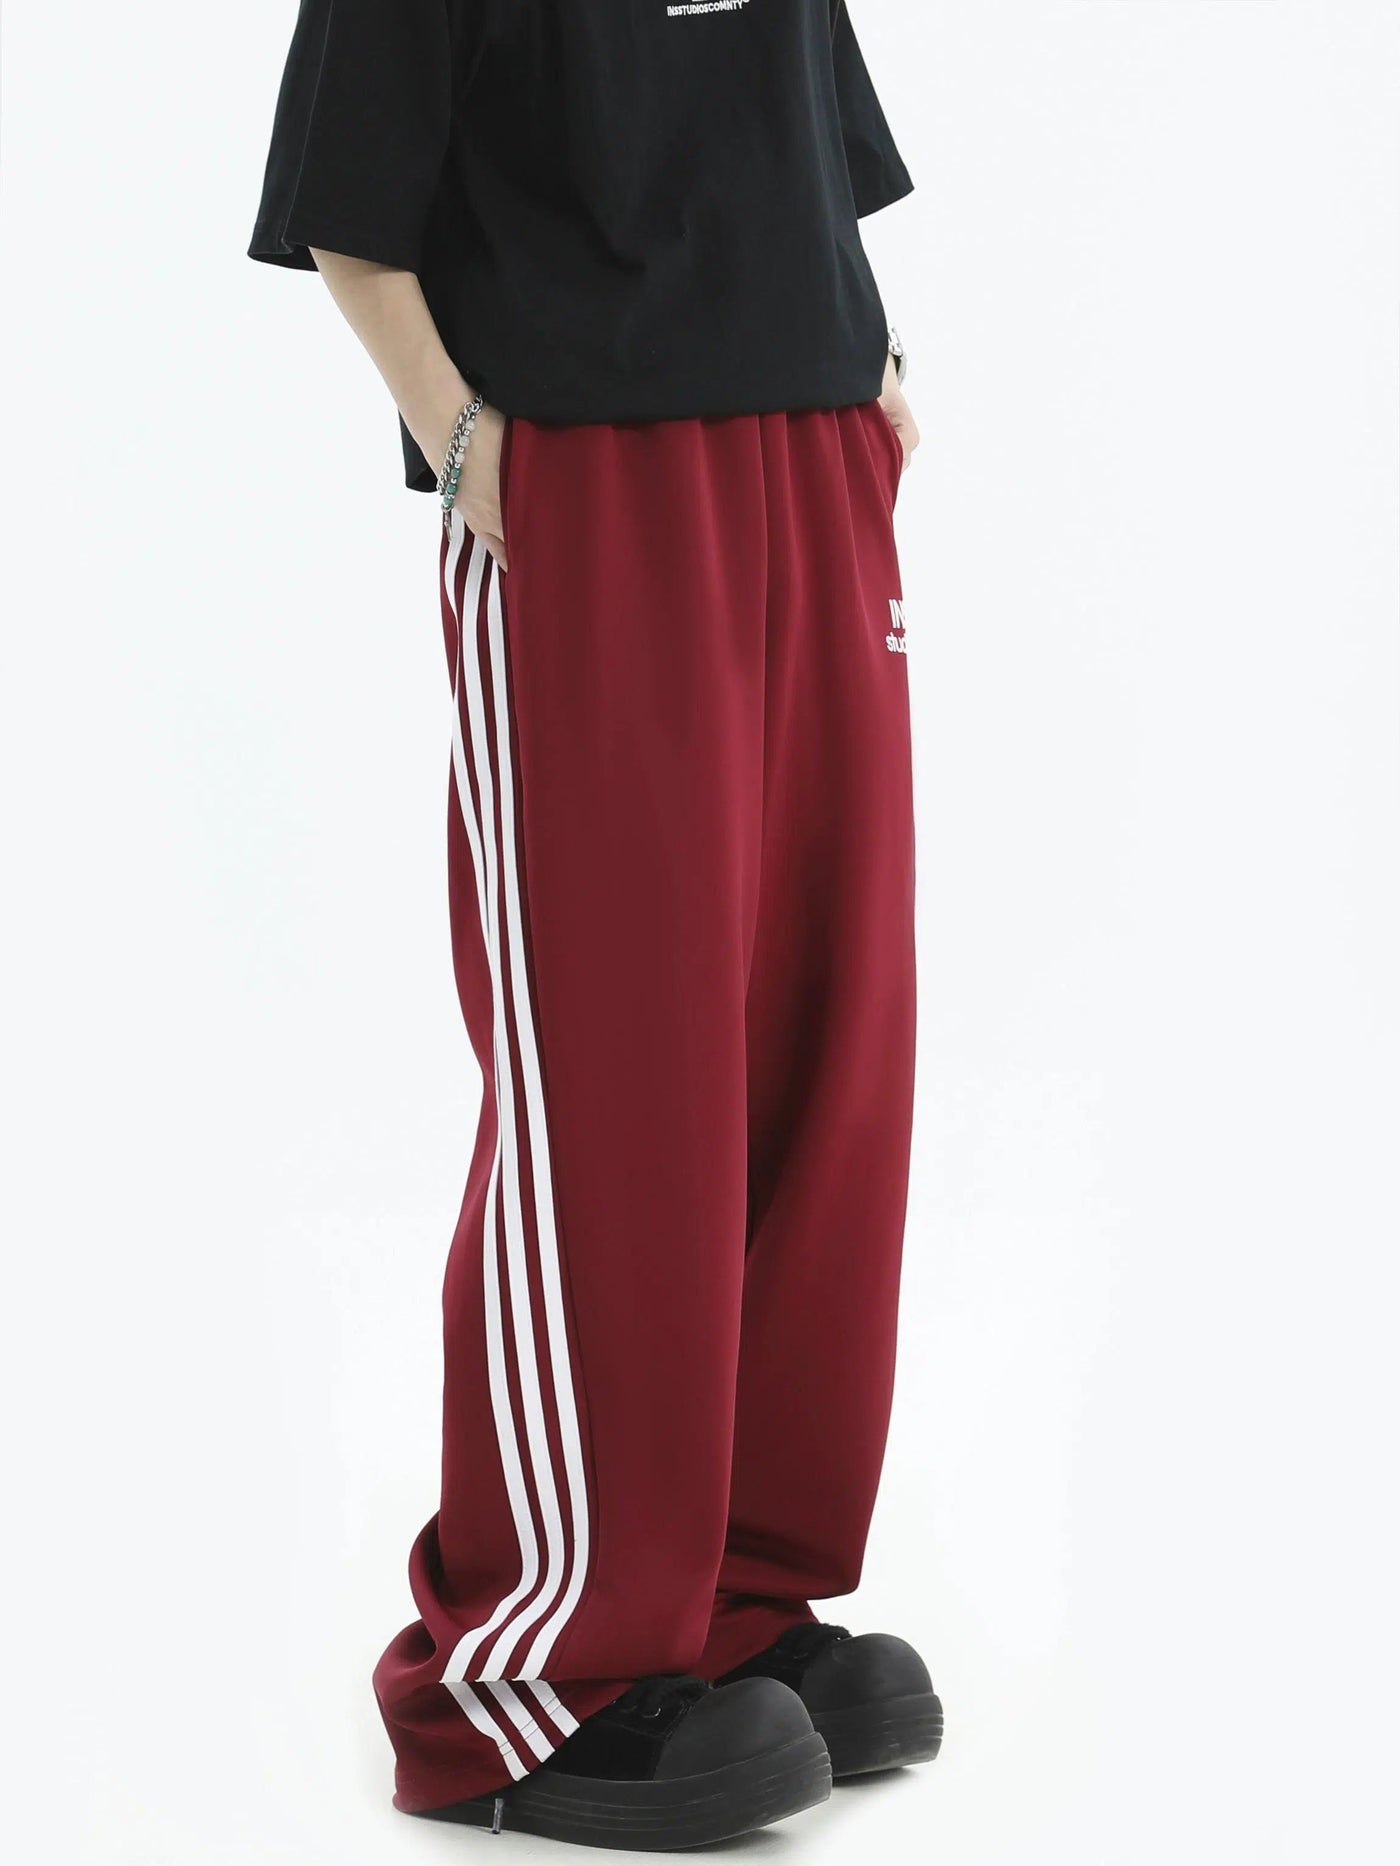 Athleisure Comfty Fit Sweatpants Korean Street Fashion Pants By INS Korea Shop Online at OH Vault